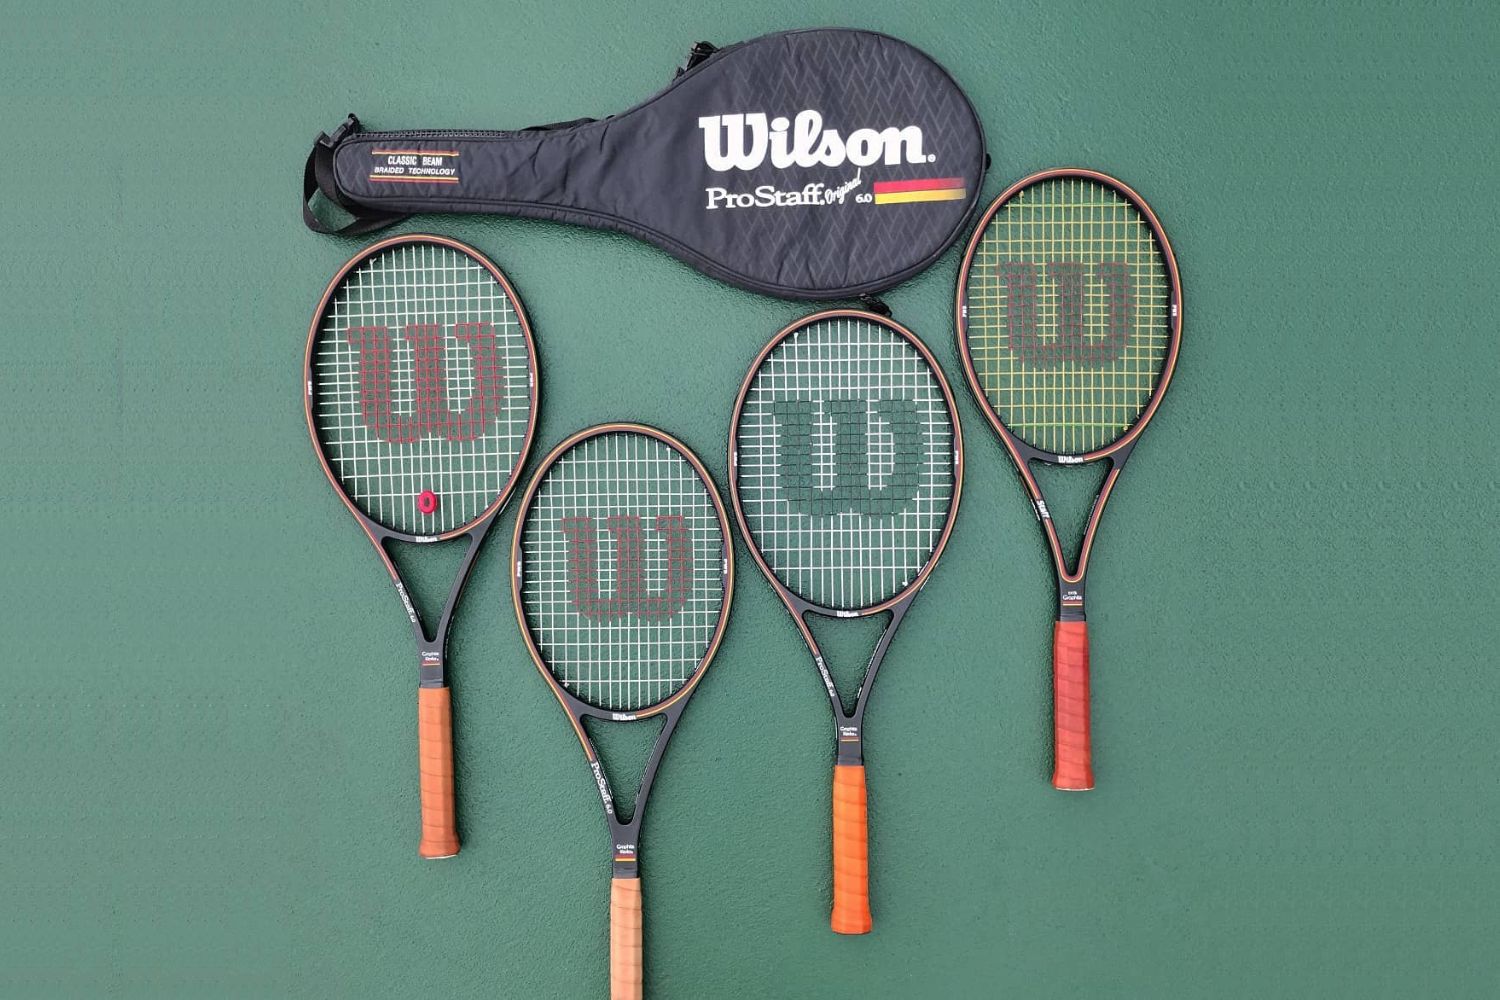 The Best Wilson Tennis Rackets Options